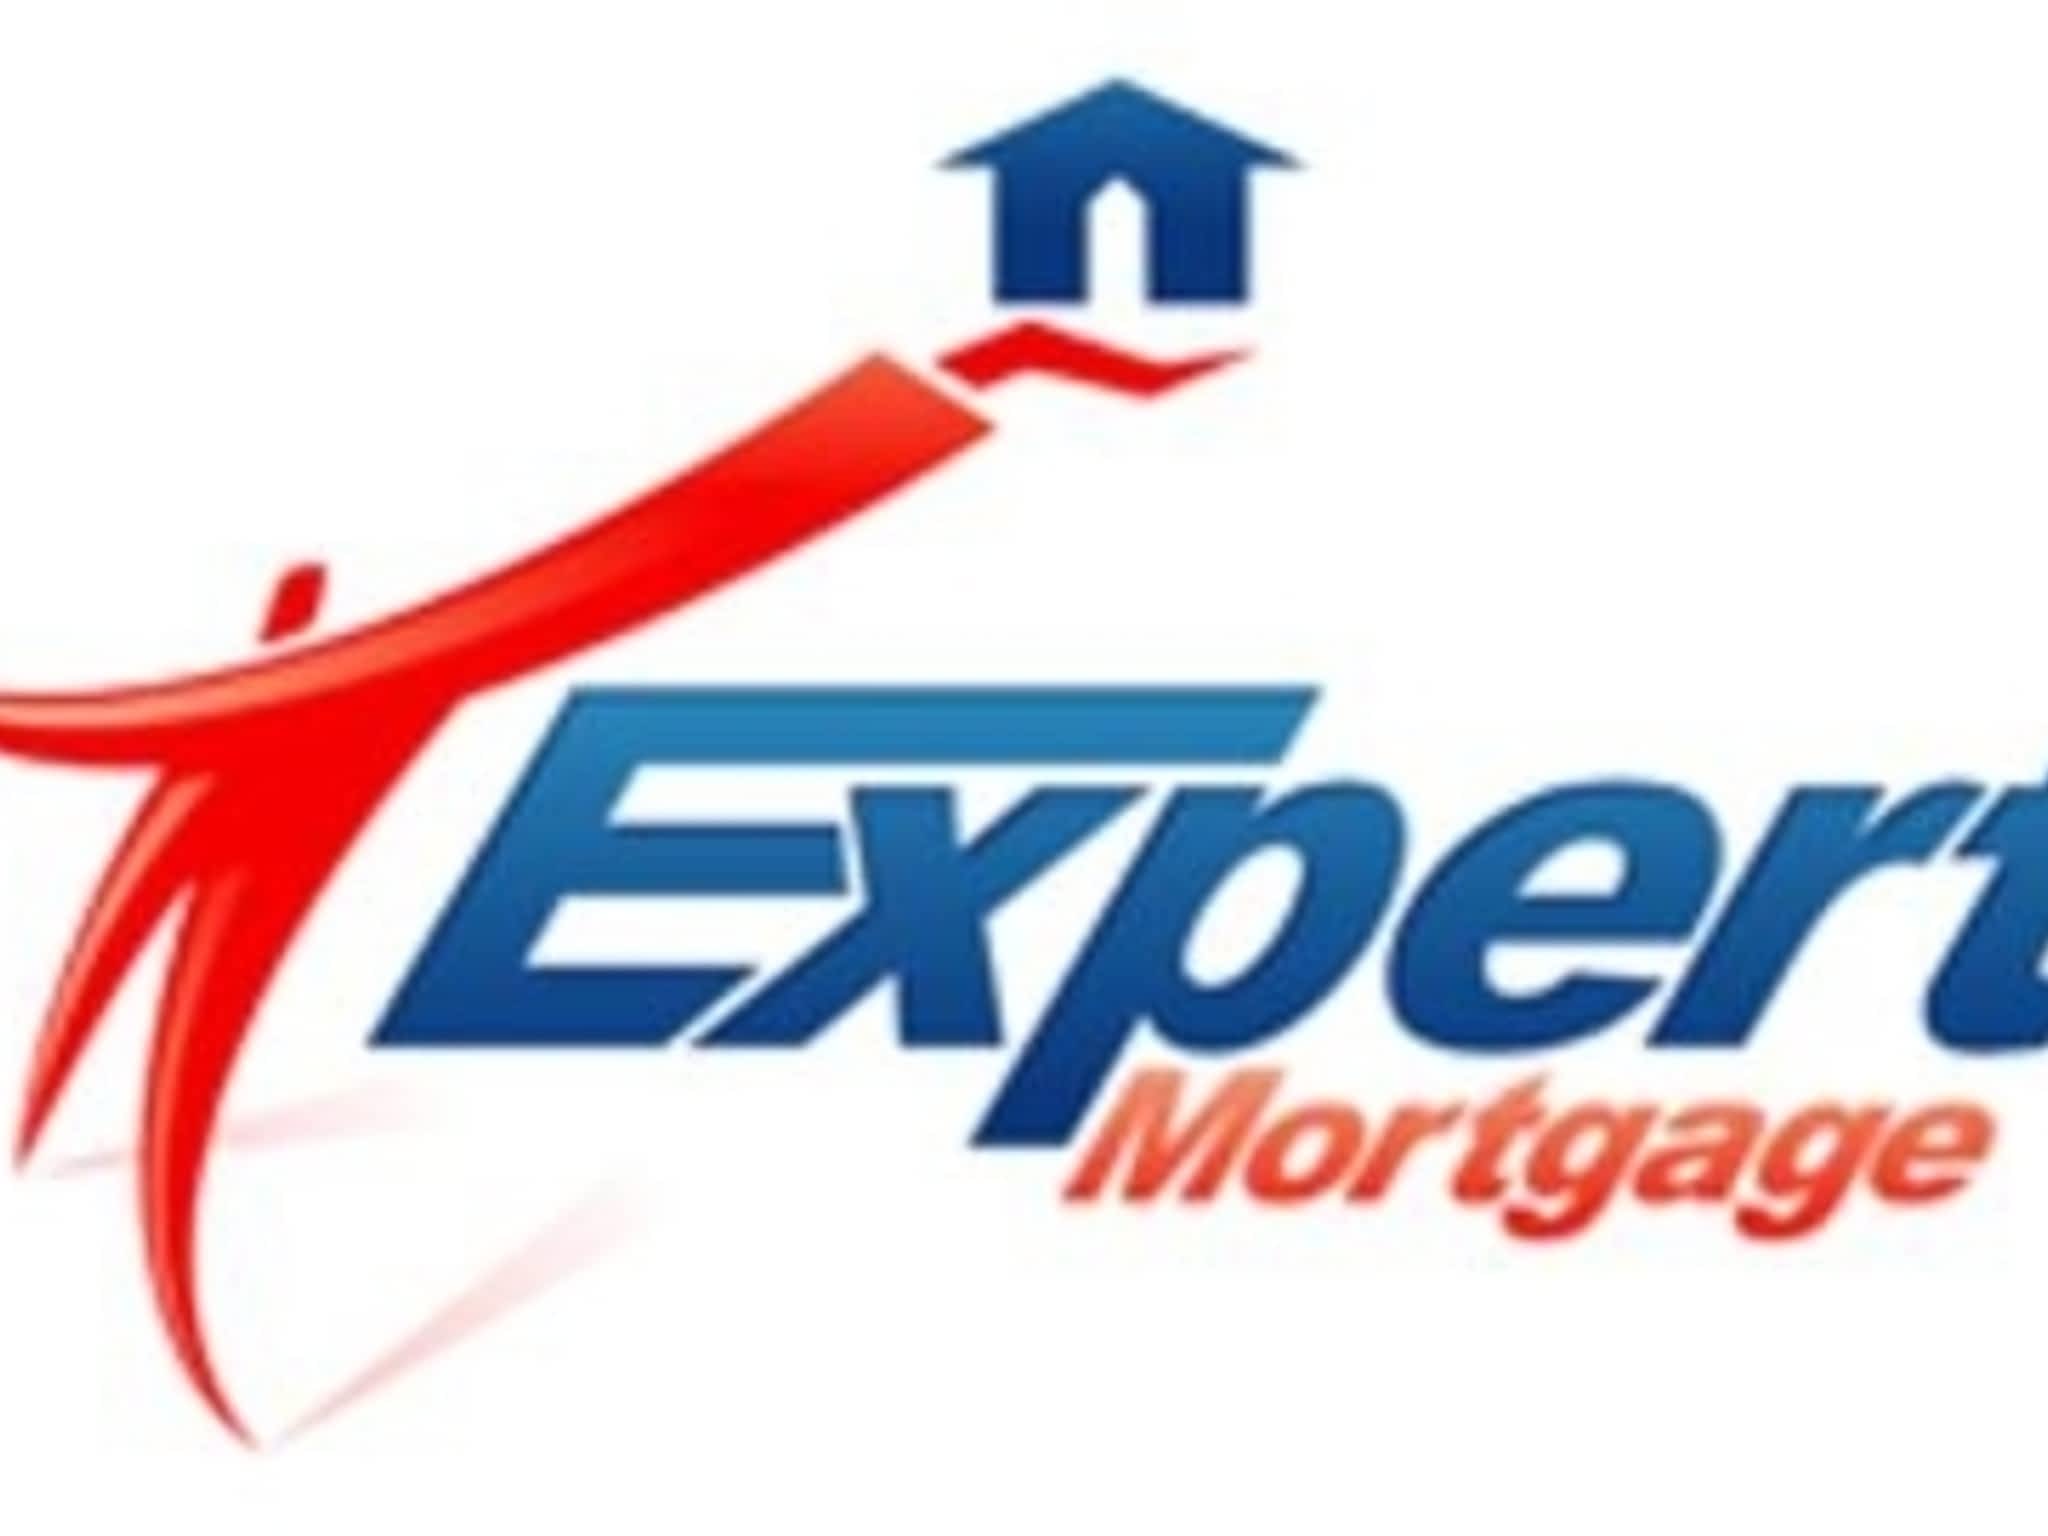 photo Expert Mortgage Brokerage